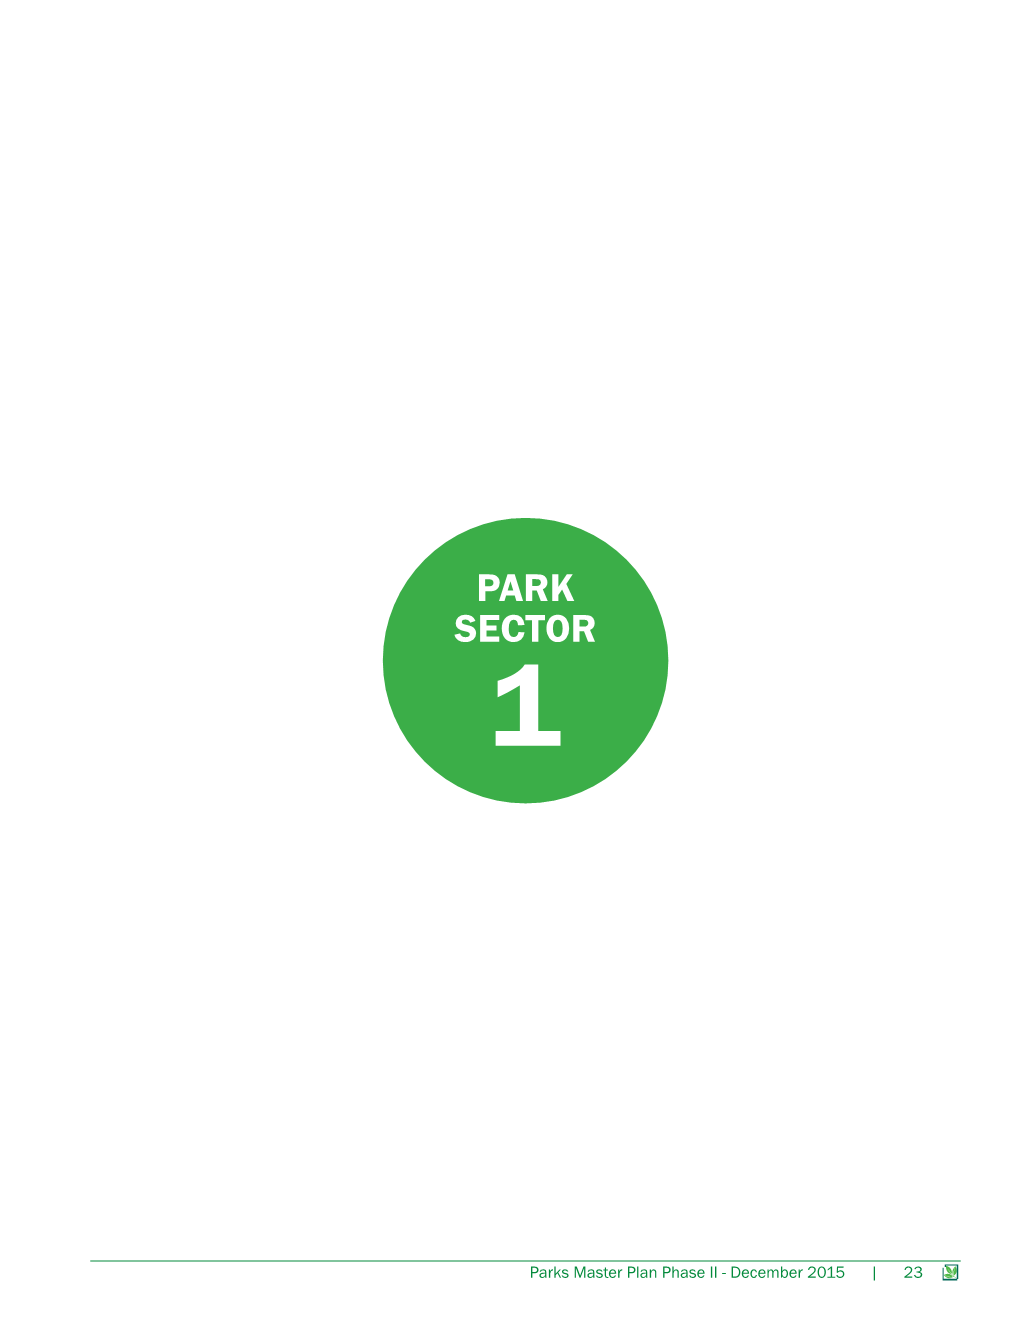 Park Sector 1